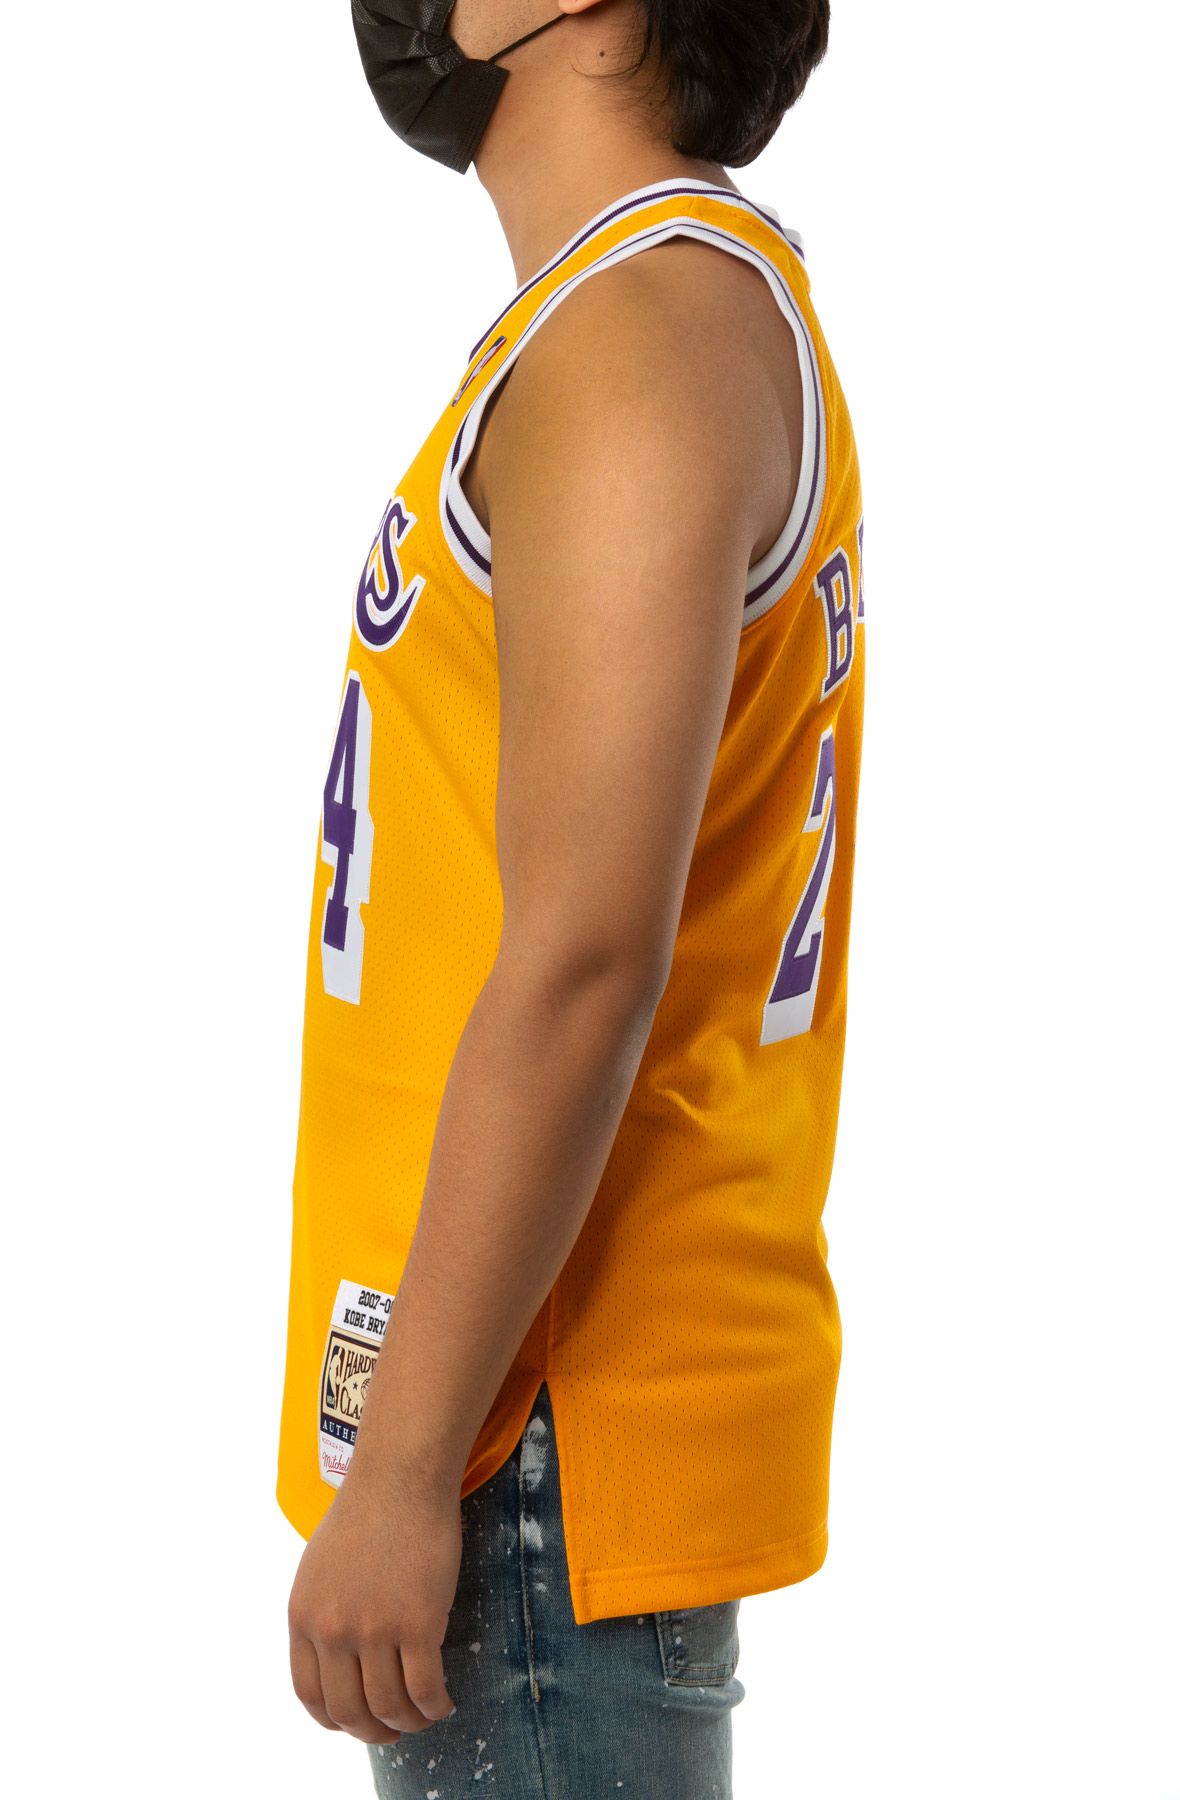 NWT Mitchell & Ness 2007-08 Kobe Bryant Lakers 60th Anniversary Jersey sz52  2XL